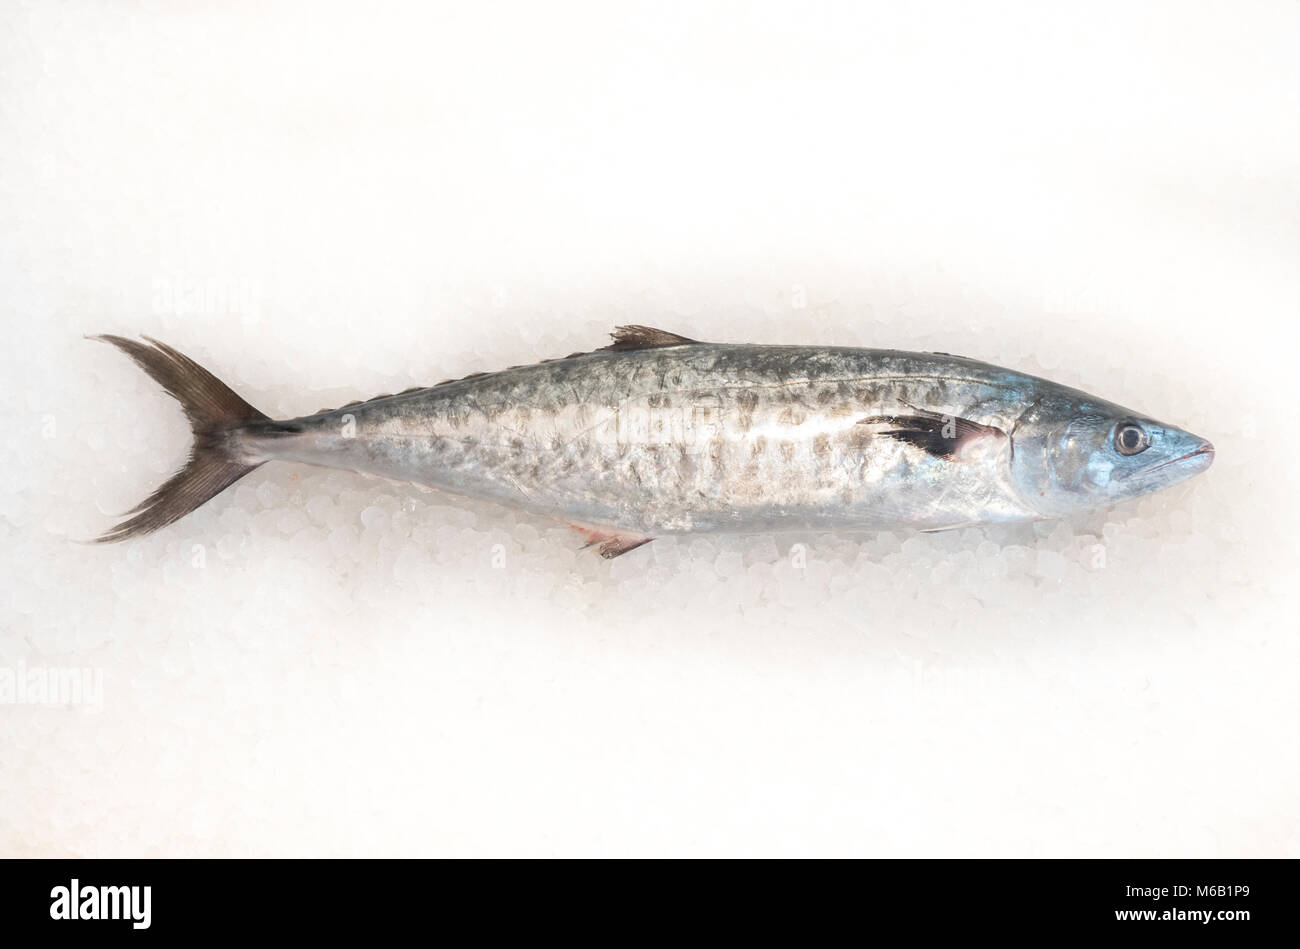 Atlantic bonito also knon as Sarda sarda or Palamida that is large mackerel-like fish Stock Photo